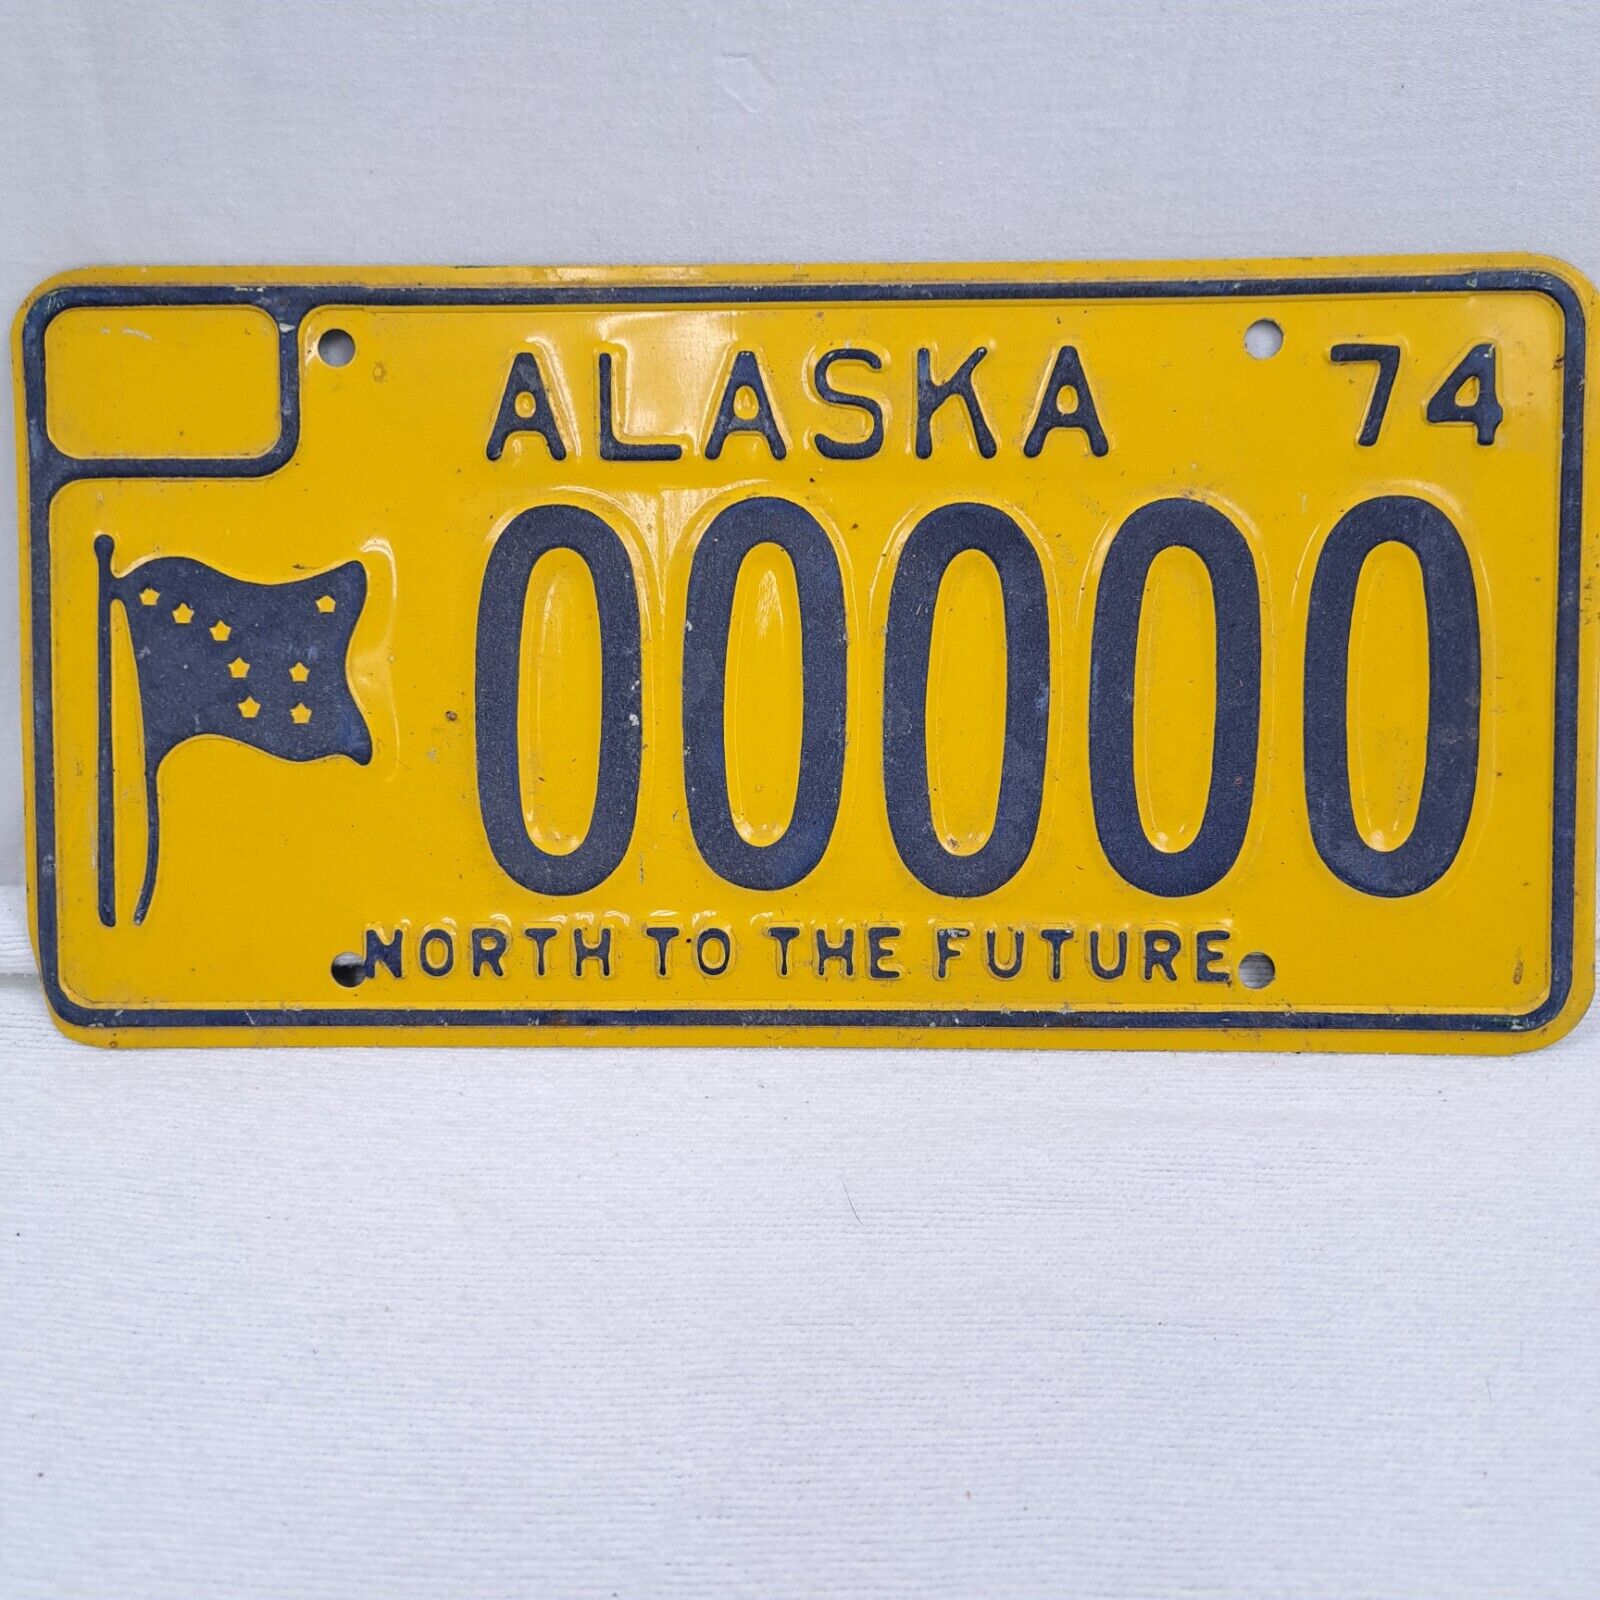 ALASKA North To The Future 00000 Vintage 1974 License Plate